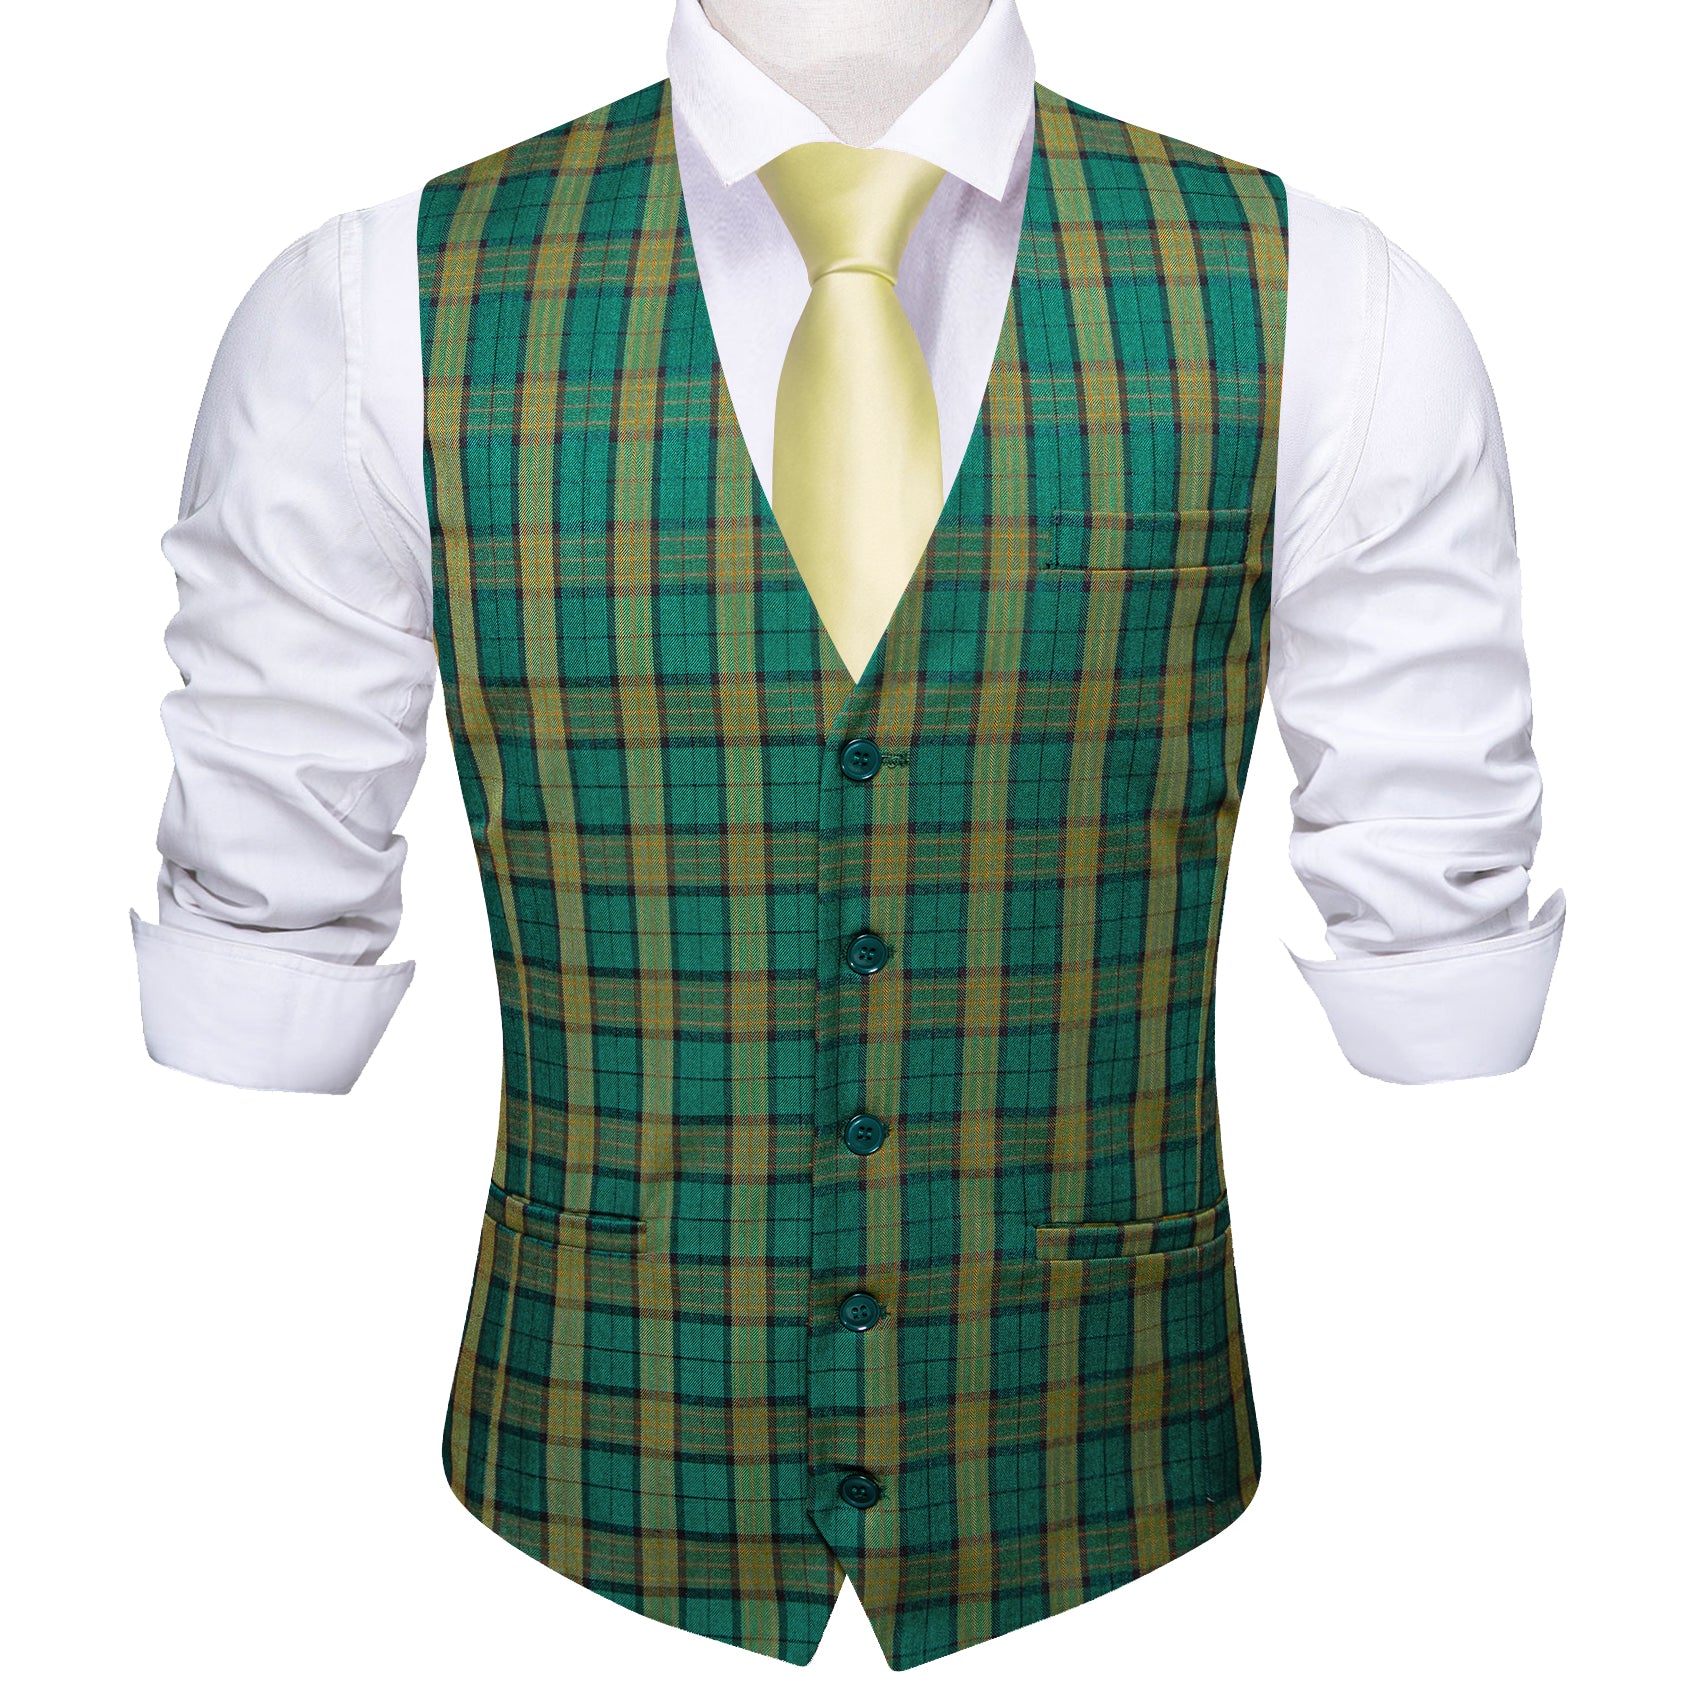 Barry.wang New Green Yellow Plaid Waistcoat Vest